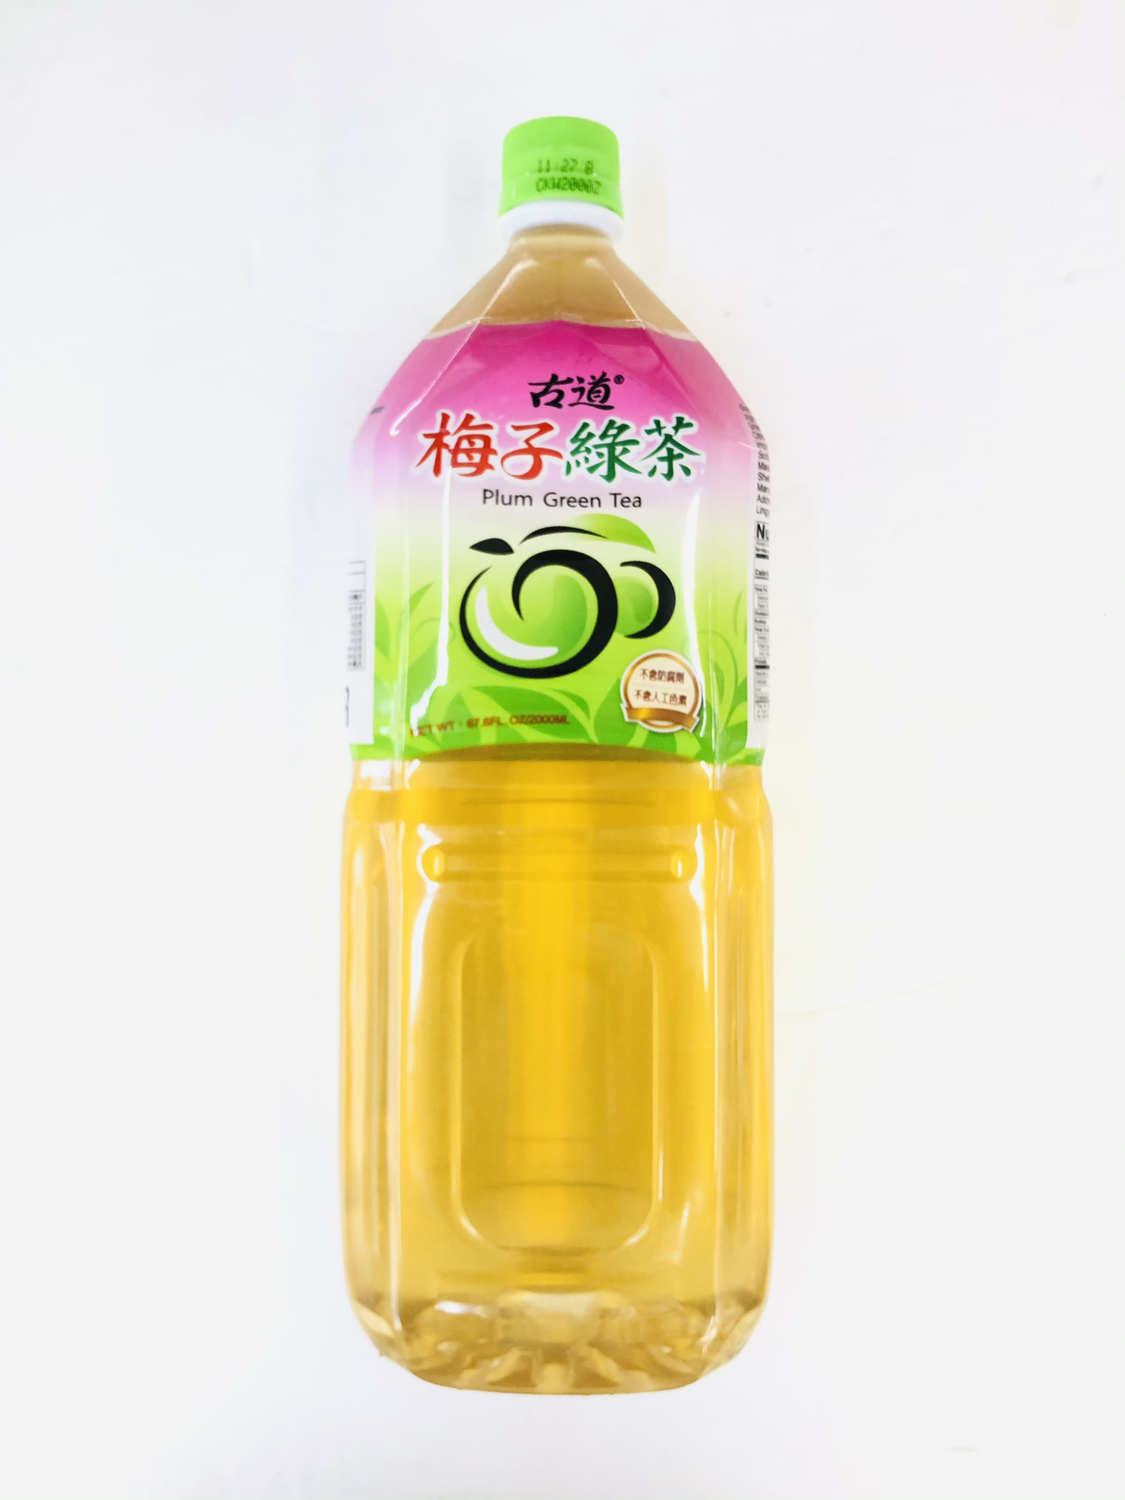 GROC【杂货】古道 梅子绿茶 67.6FL.OZ/2000ML